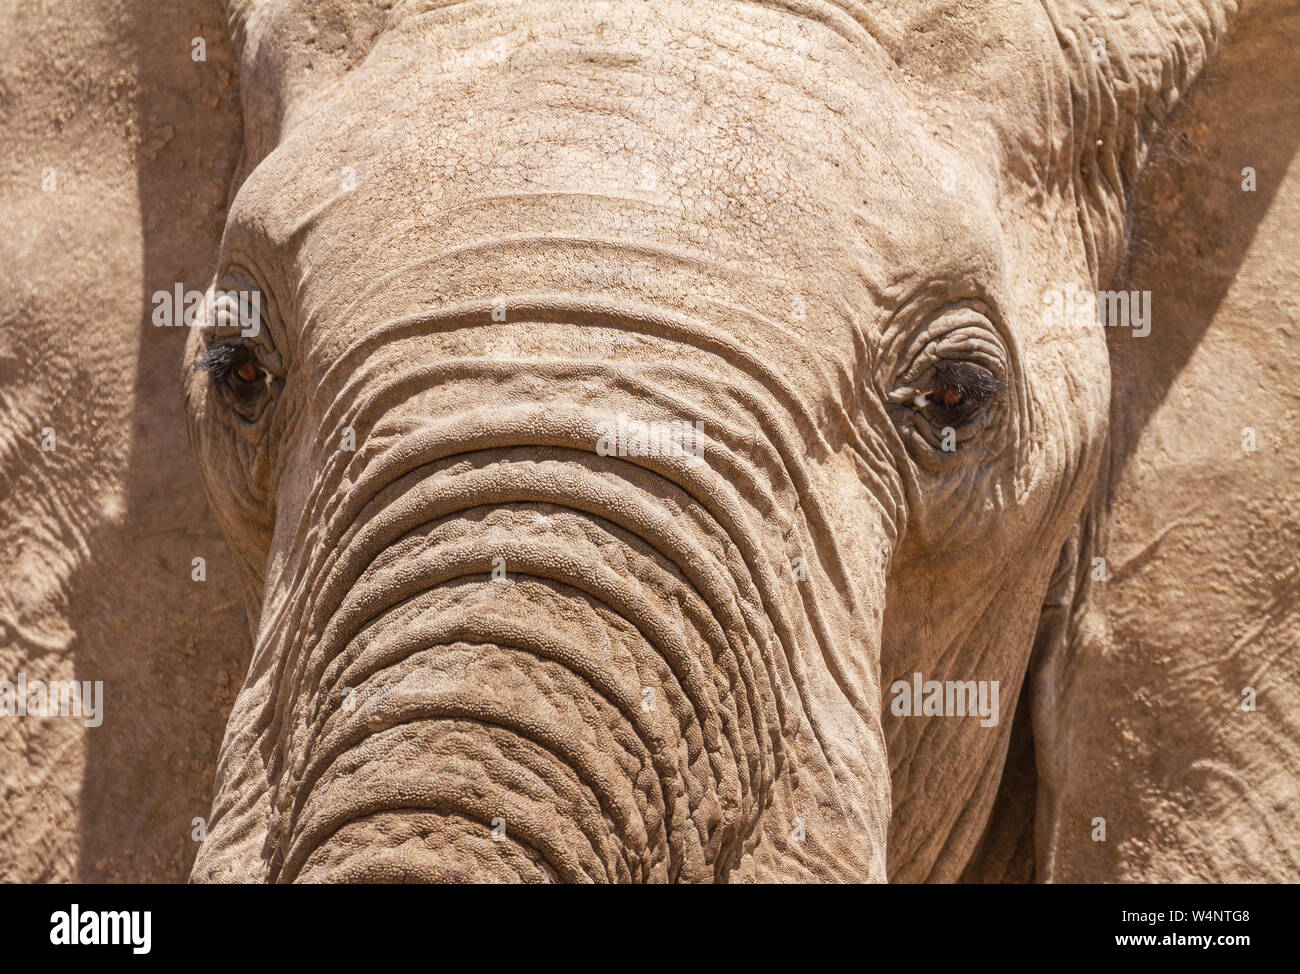 African elephant face, Loxodonta Africana, closeup close-up, Ol Pejeta Conservancy, Kenya, East Africa. Elephant skin detail, trunk folds and texture Stock Photo